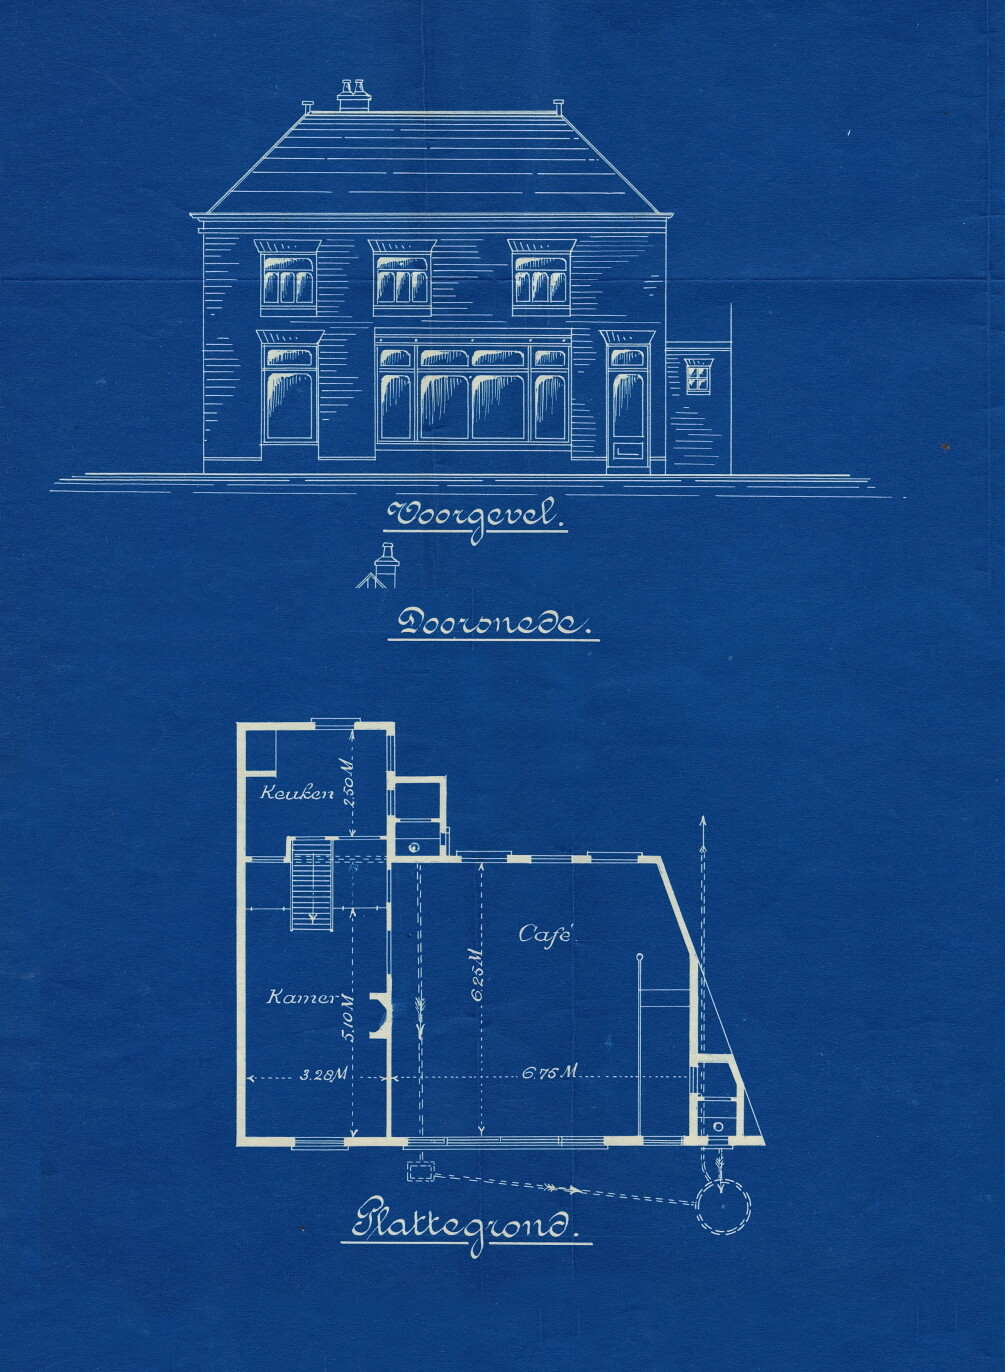 bd-detail-blauwdruk-venestraat-99-26-11-1909-jpeg-pix-1400.jpg